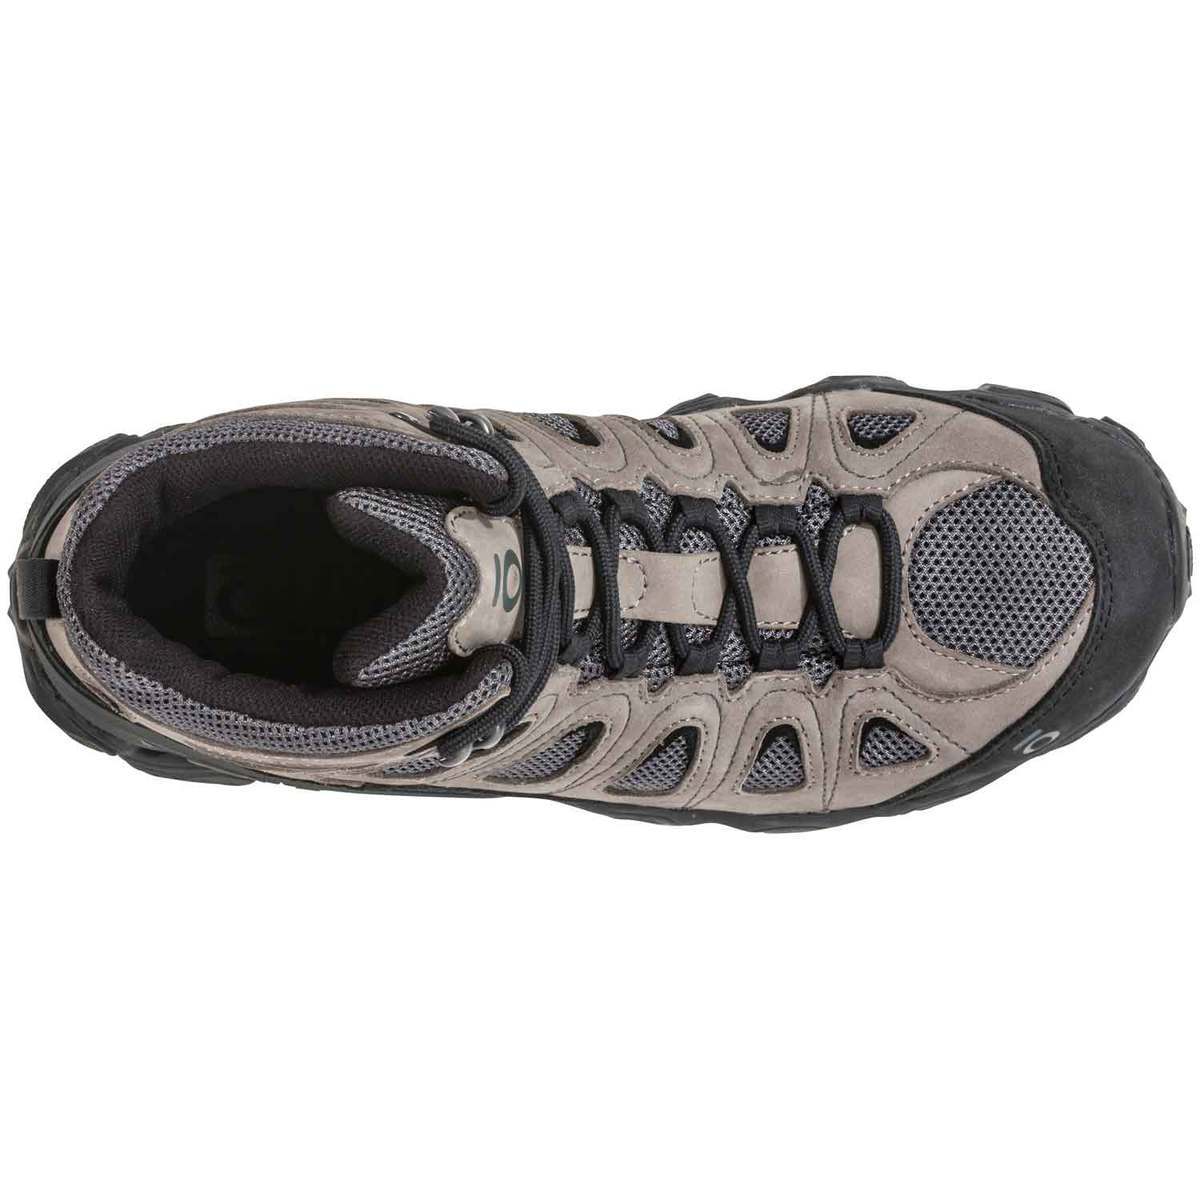 Oboz Men's Sawtooth II Mid Hiking Boots | Sportsman's Warehouse